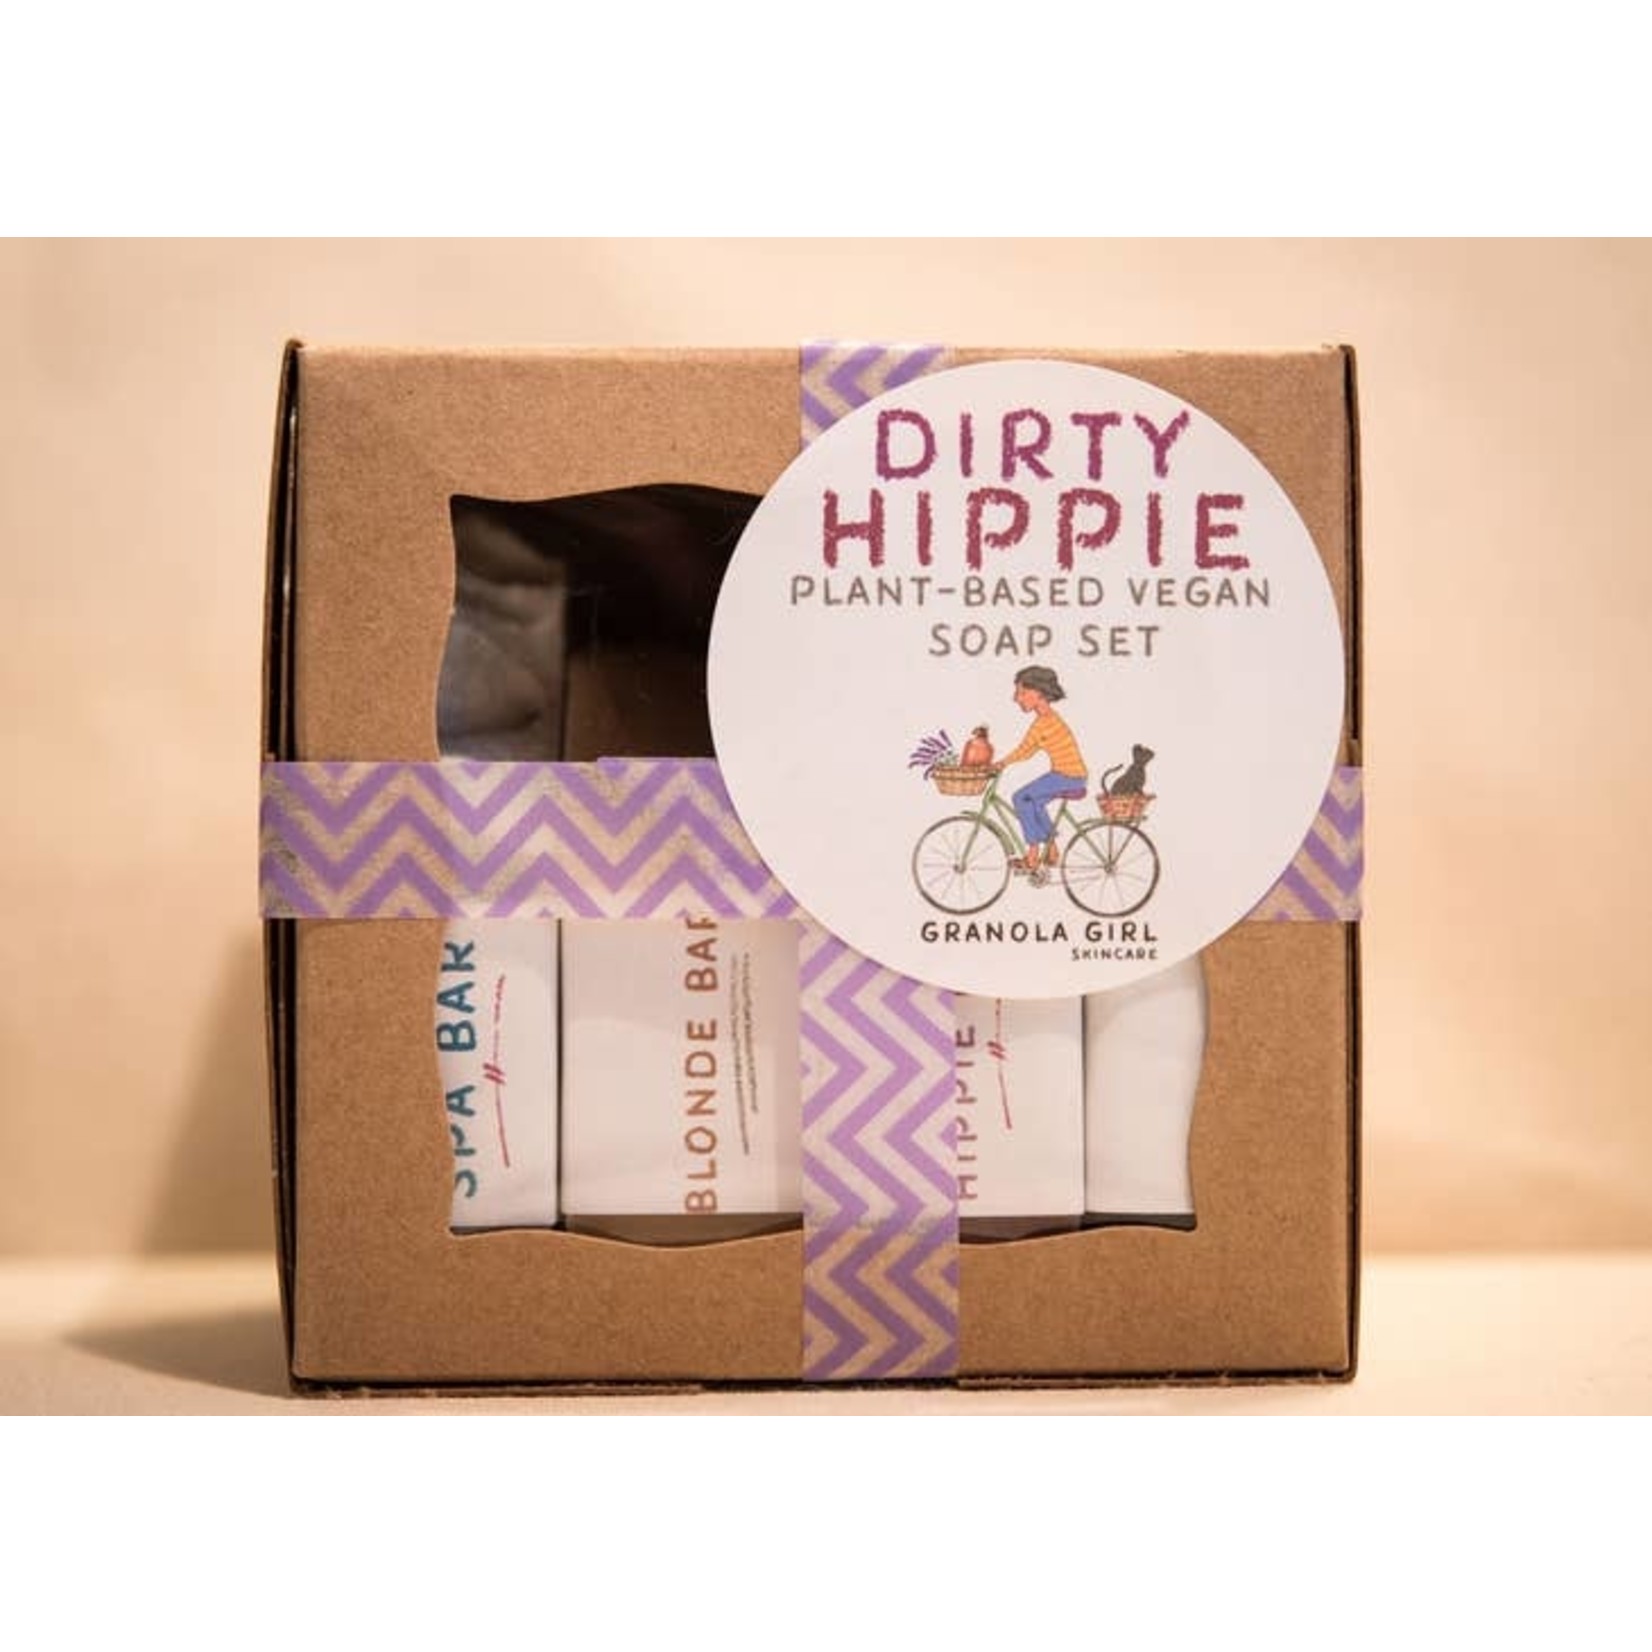 Granola Girl Skincare / Teehaus Bath + Body Dirty Hippie Vegan Soap Set